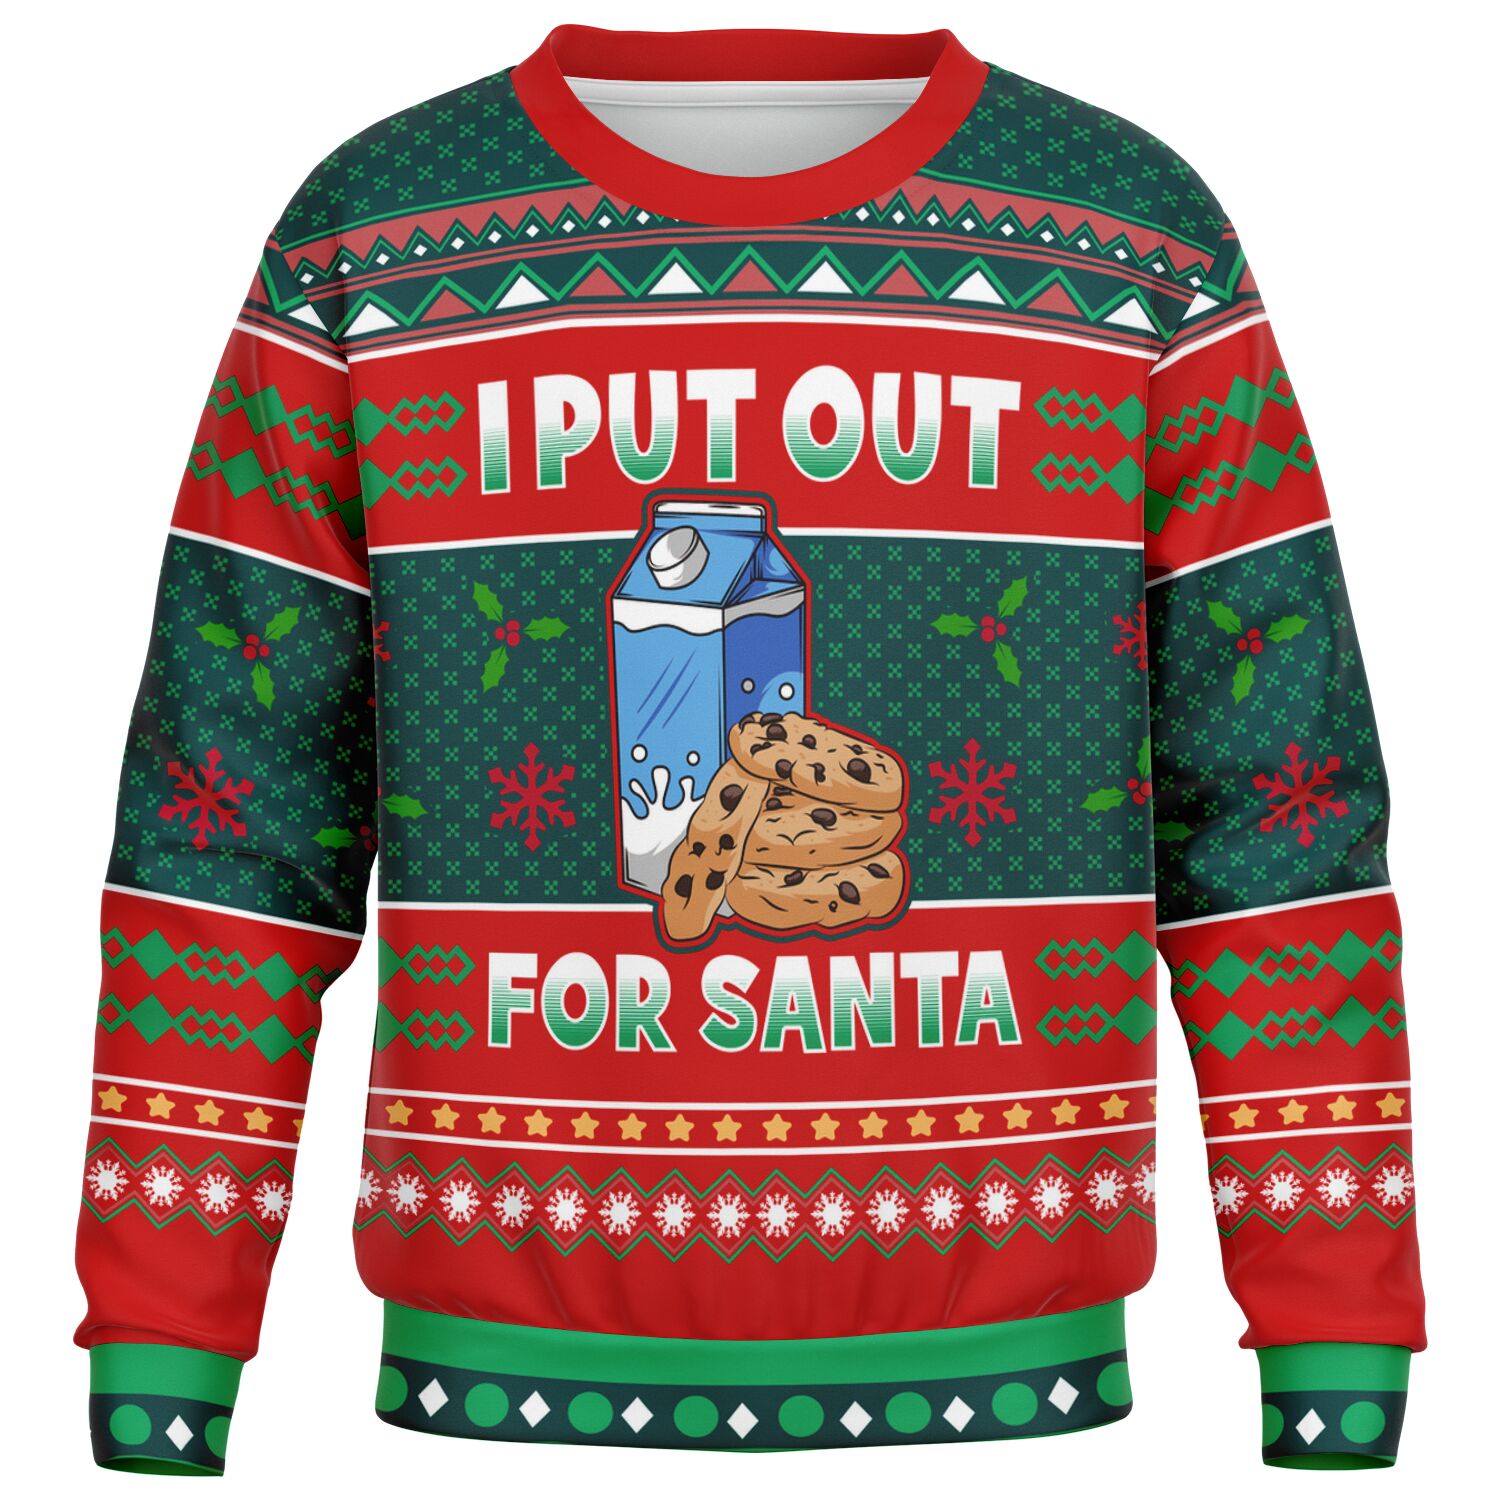 I put out for Santa Fashion Kids/Youth Sweatshirt